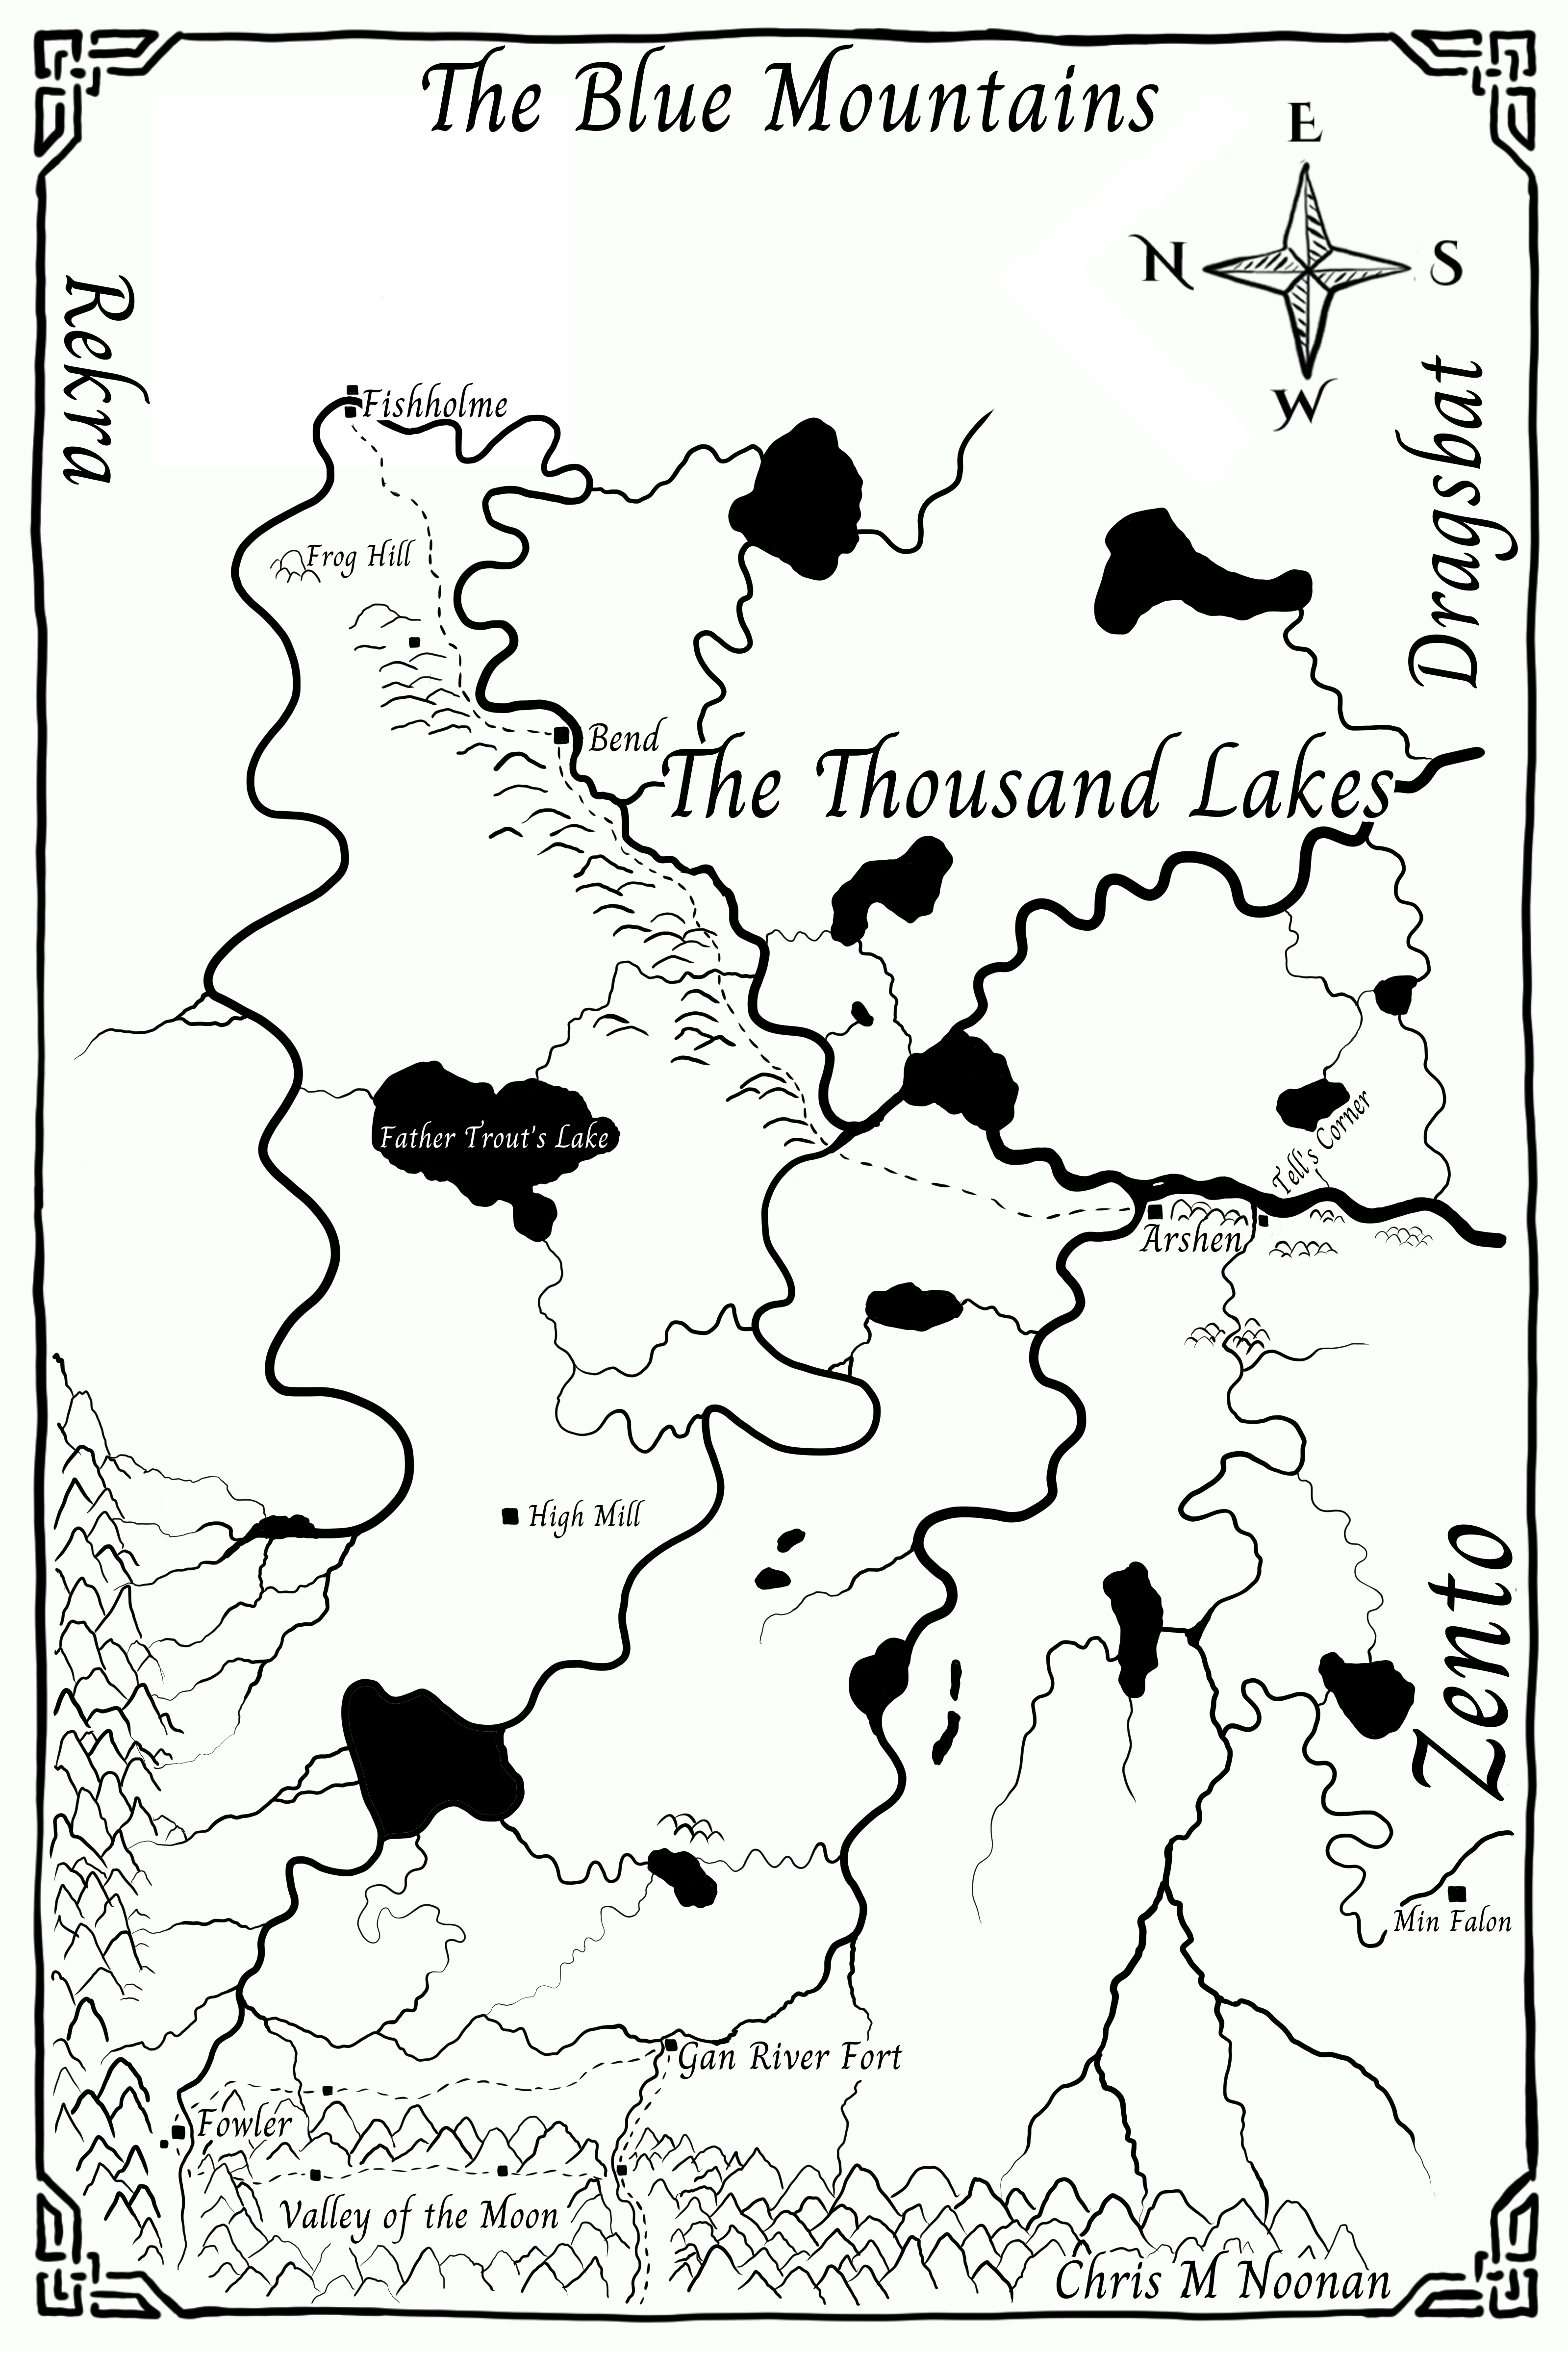 The Thousand Lakes Base Map Image